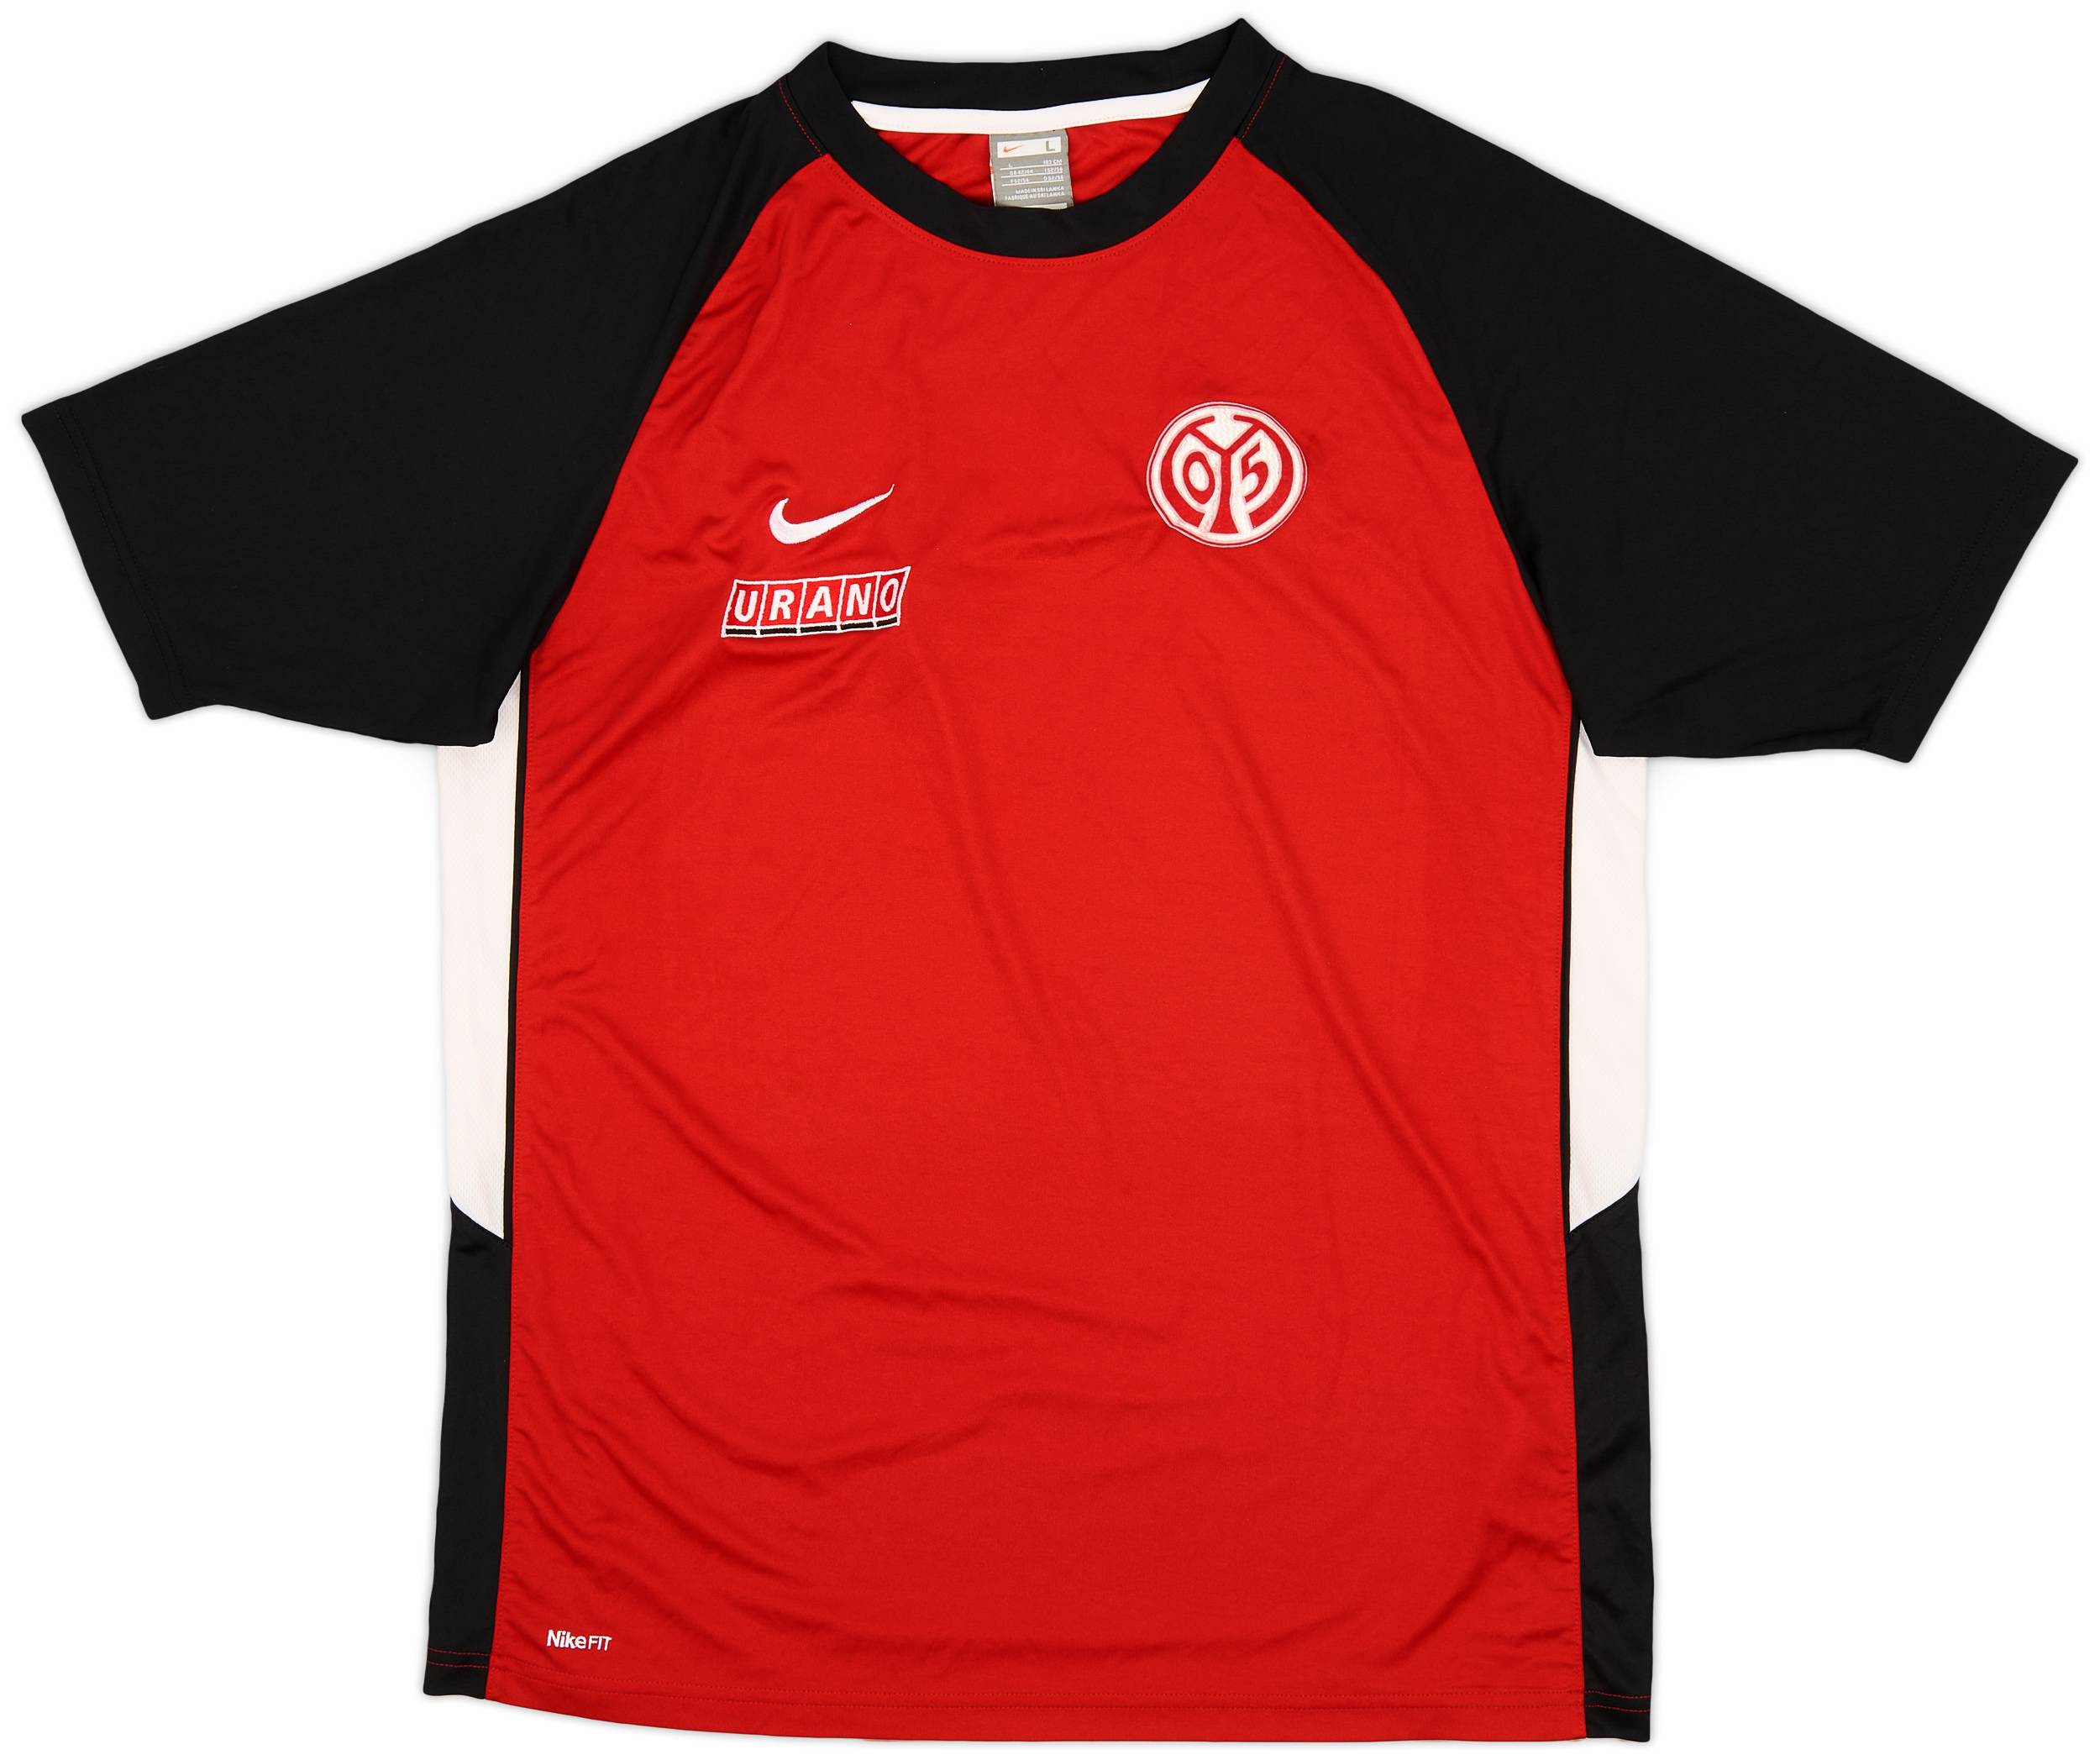 2009-10 Mainz Nike Training Shirt - 8/10 - (L)